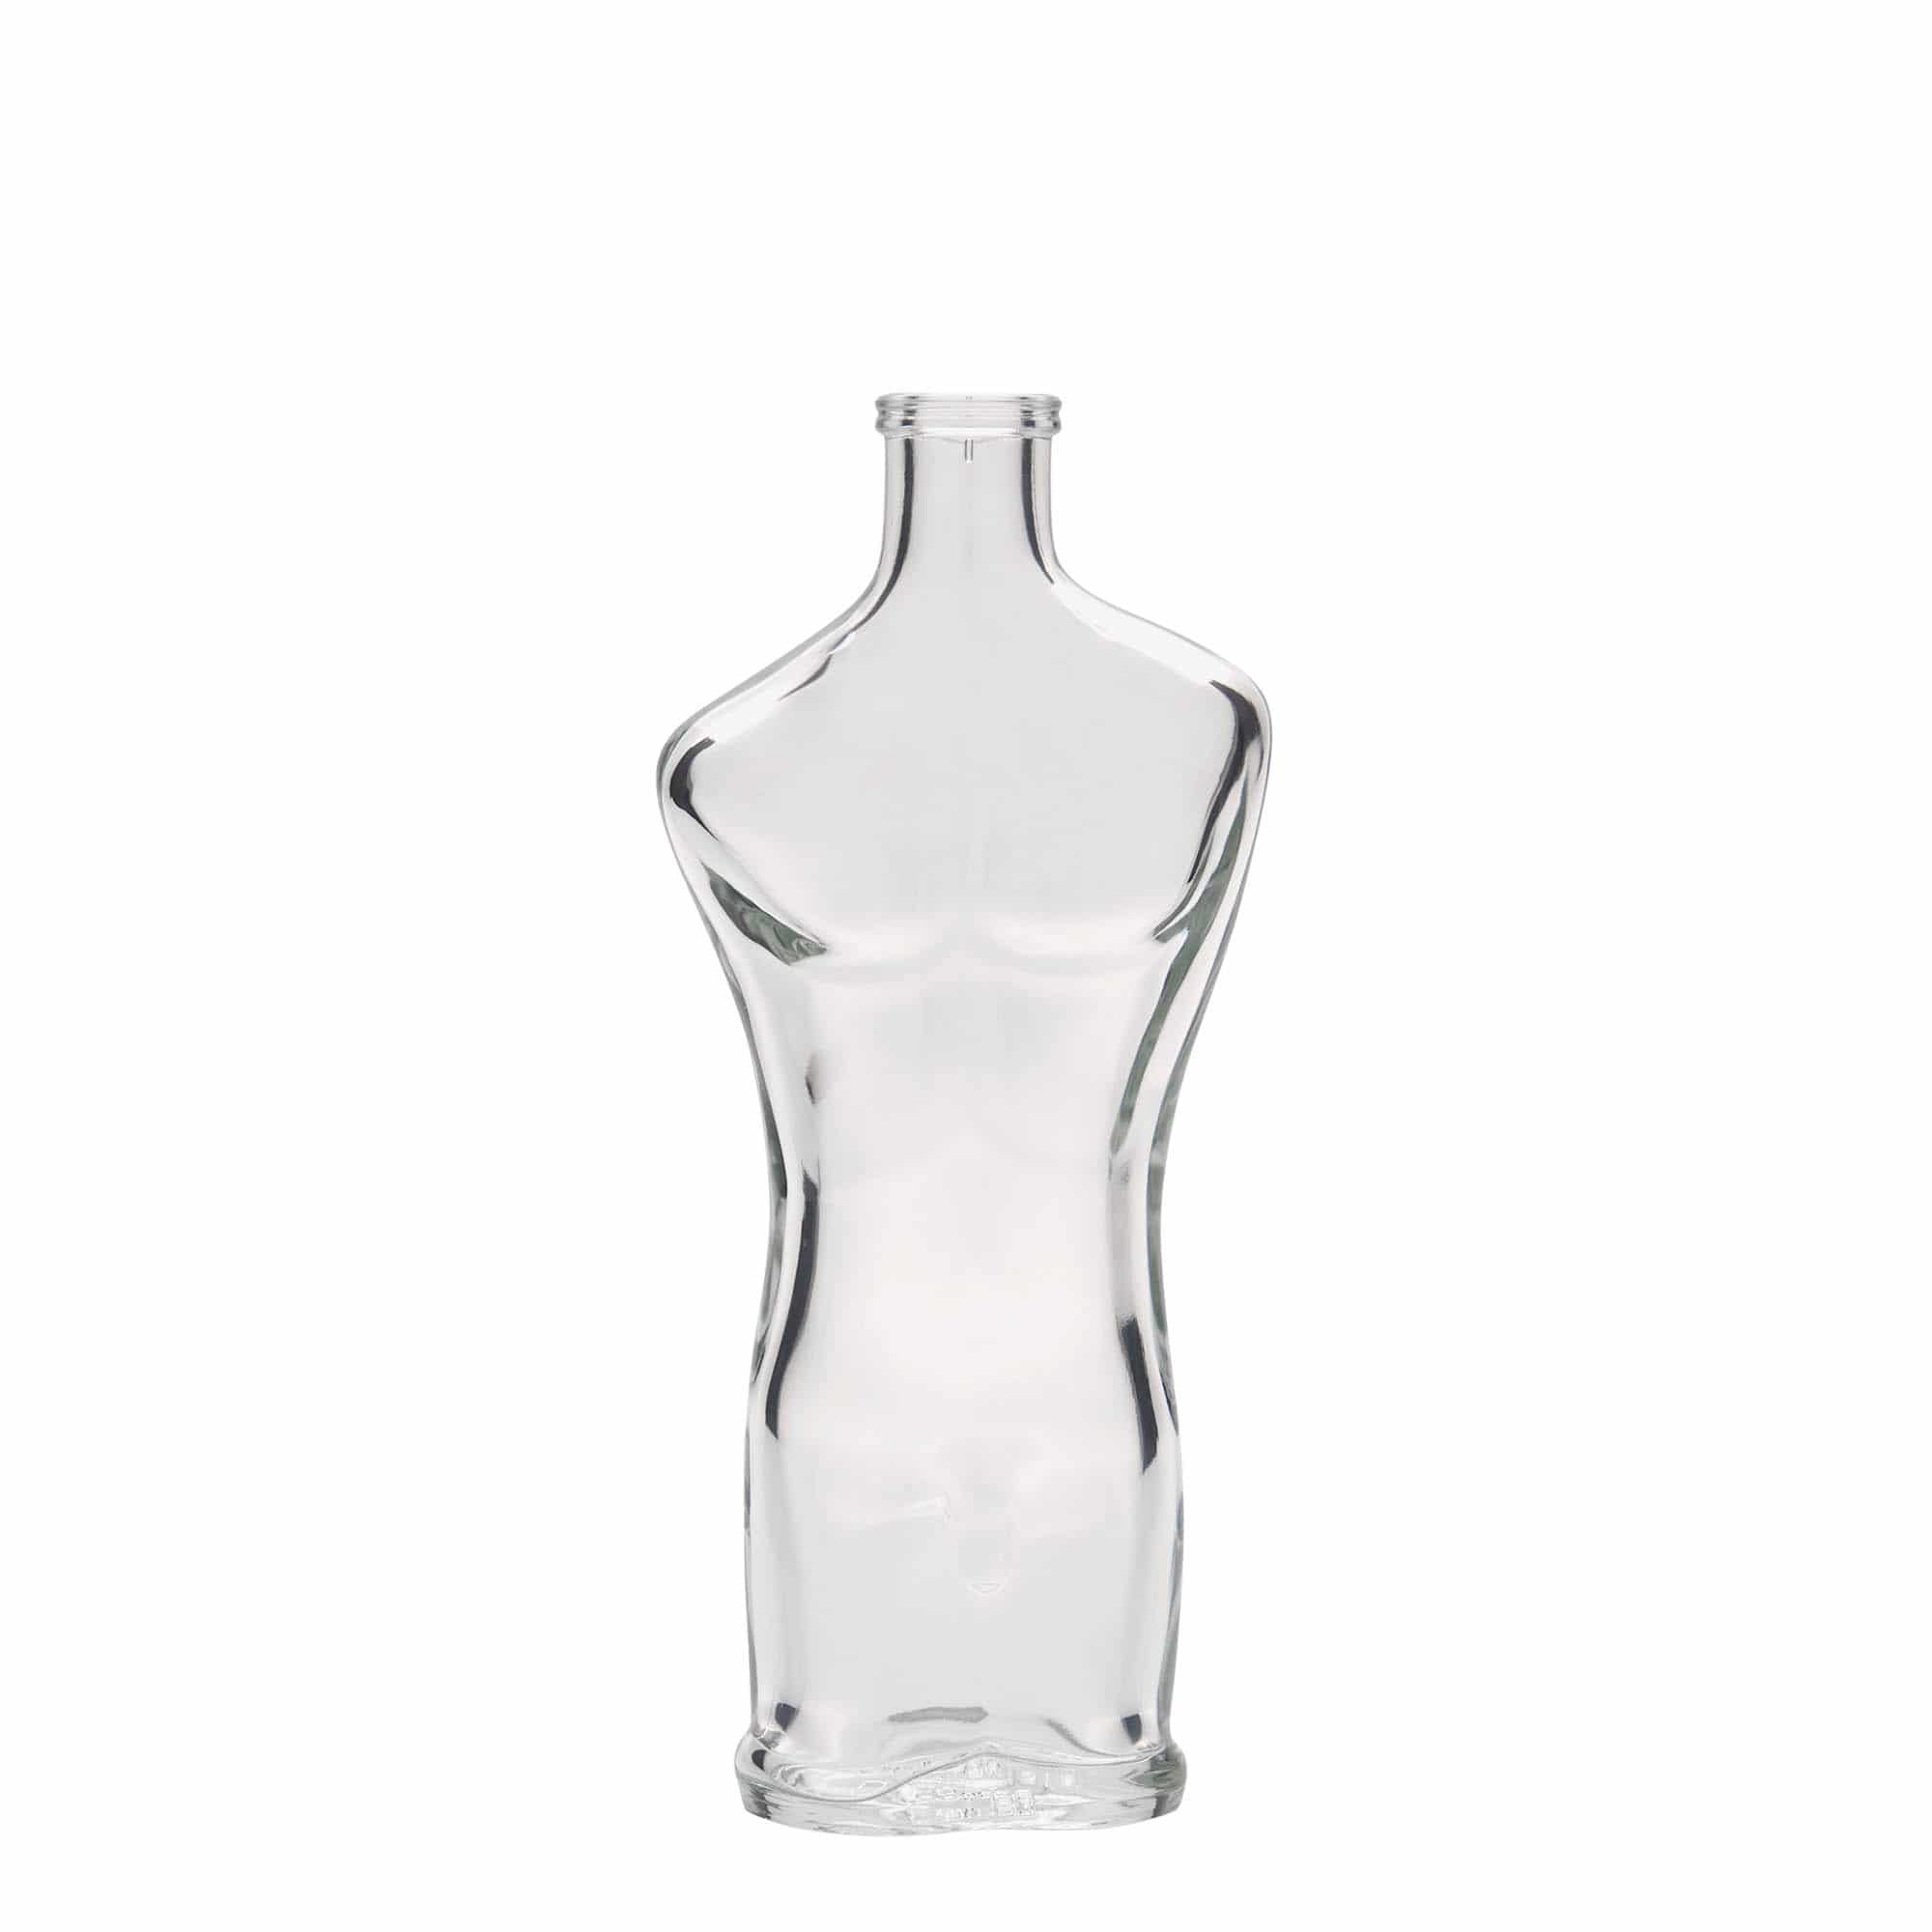 200 ml glass bottle 'Adam', closure: cork